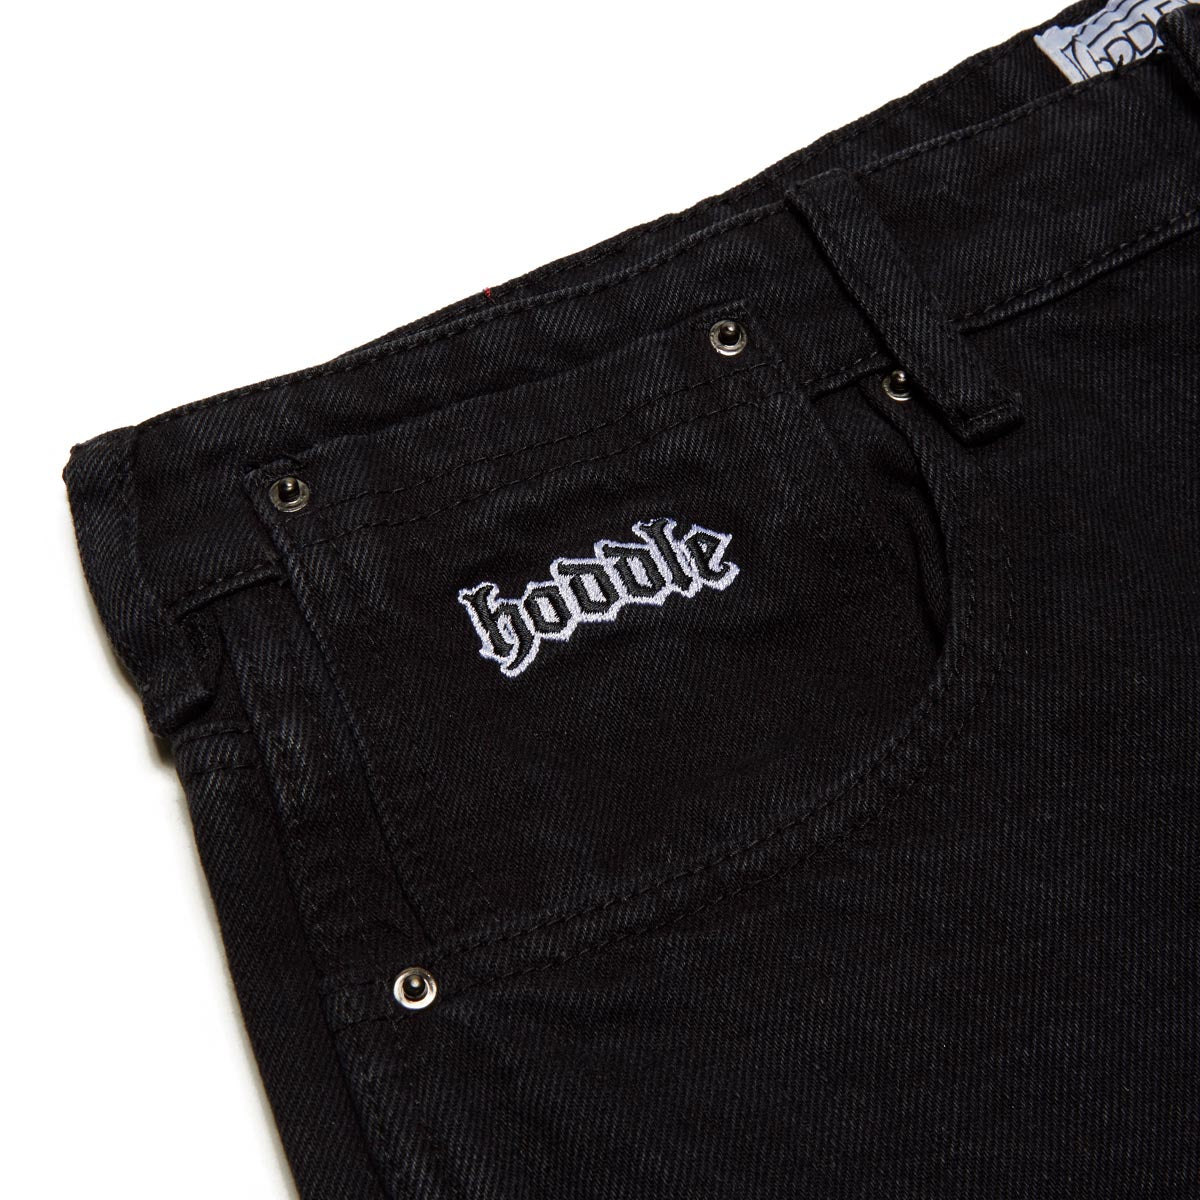 Hoddle 12o Denim Ranger Jeans - Black/Black image 3